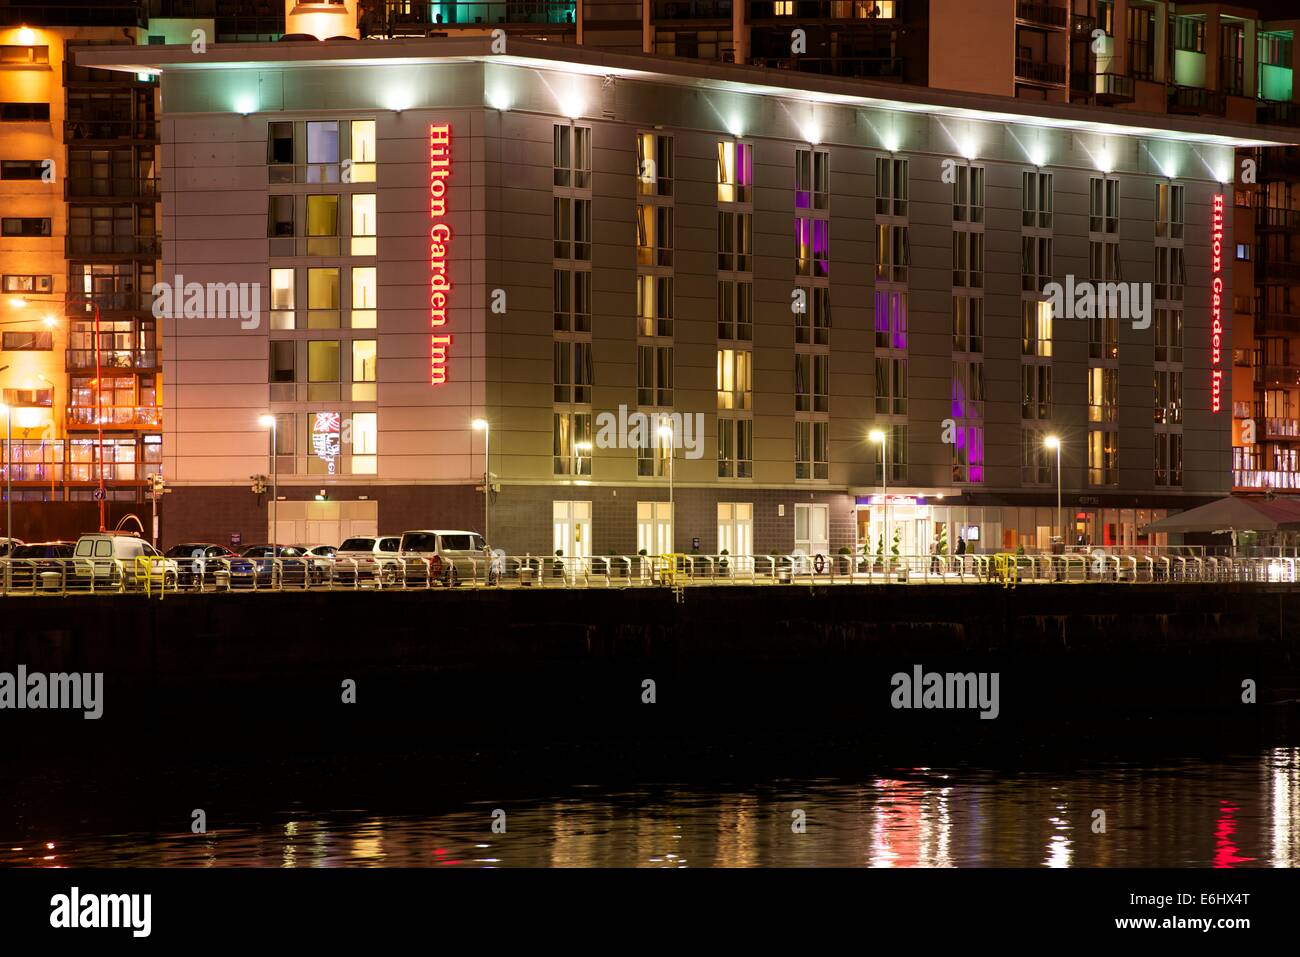 Hilton Garden Inn, Finnieston Quay, Glasgow. Stock Photo